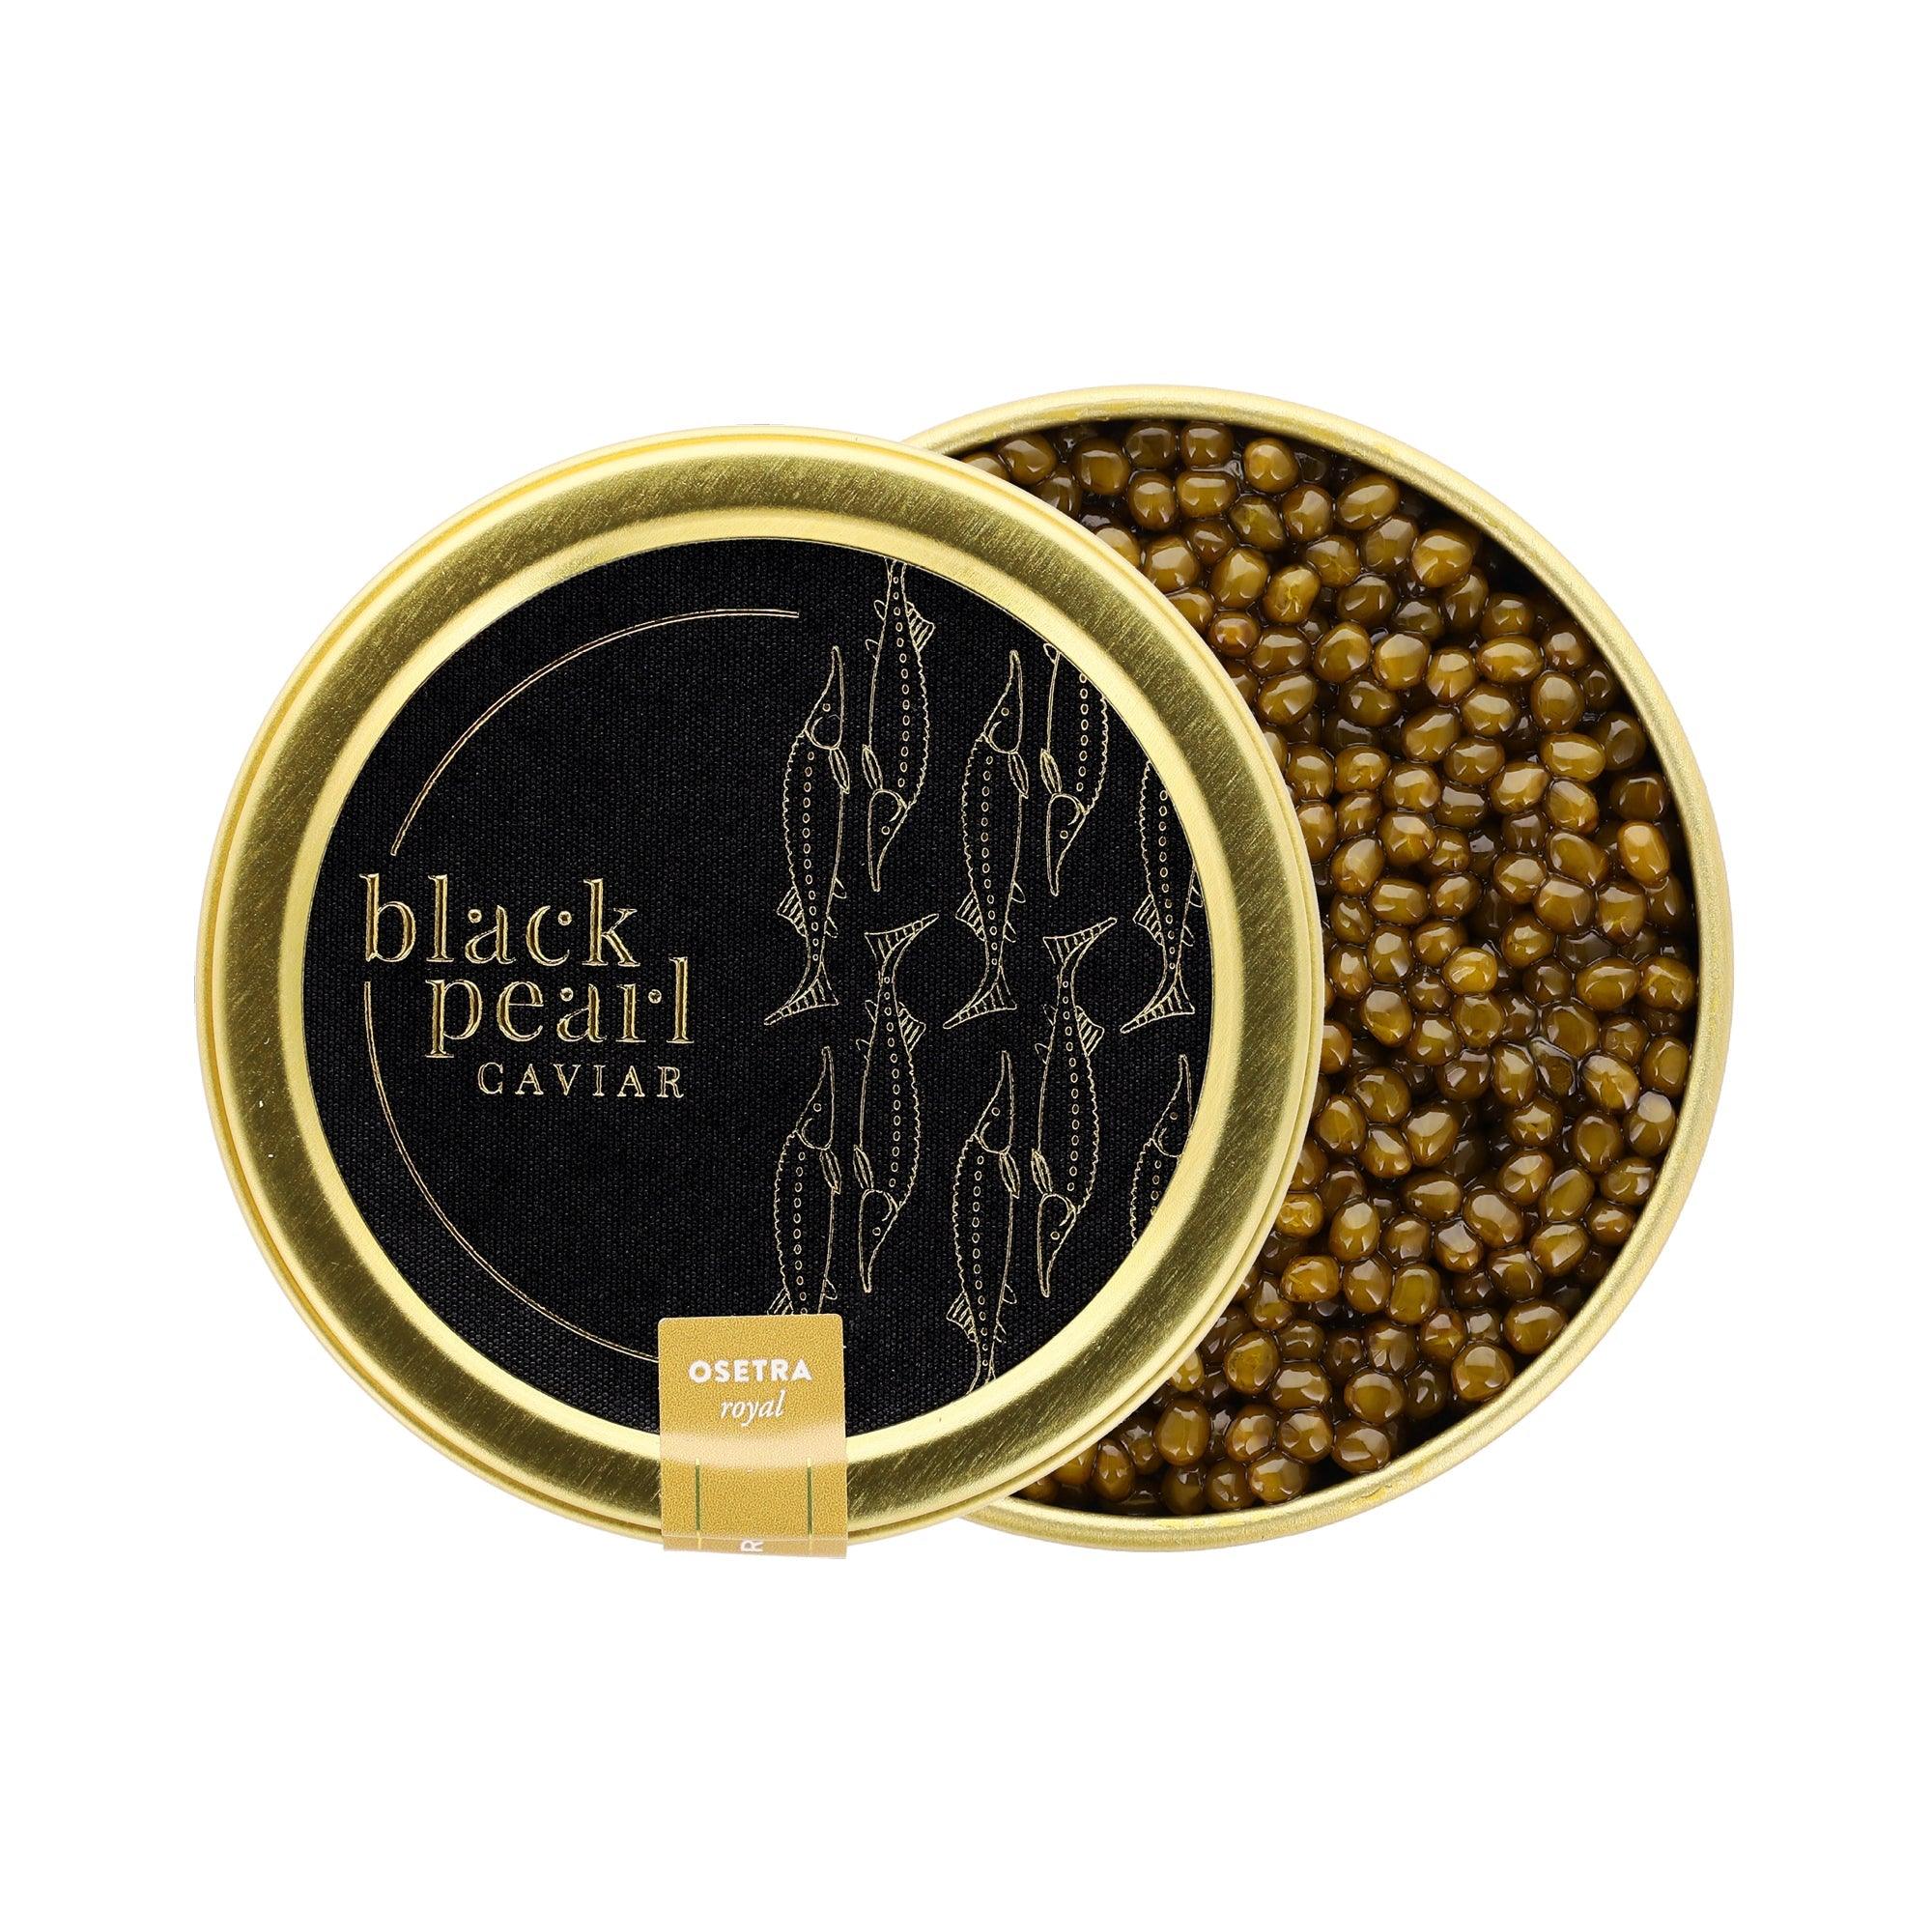 medium size caviar, amber to gold color, creamy flavors, chef's favorite